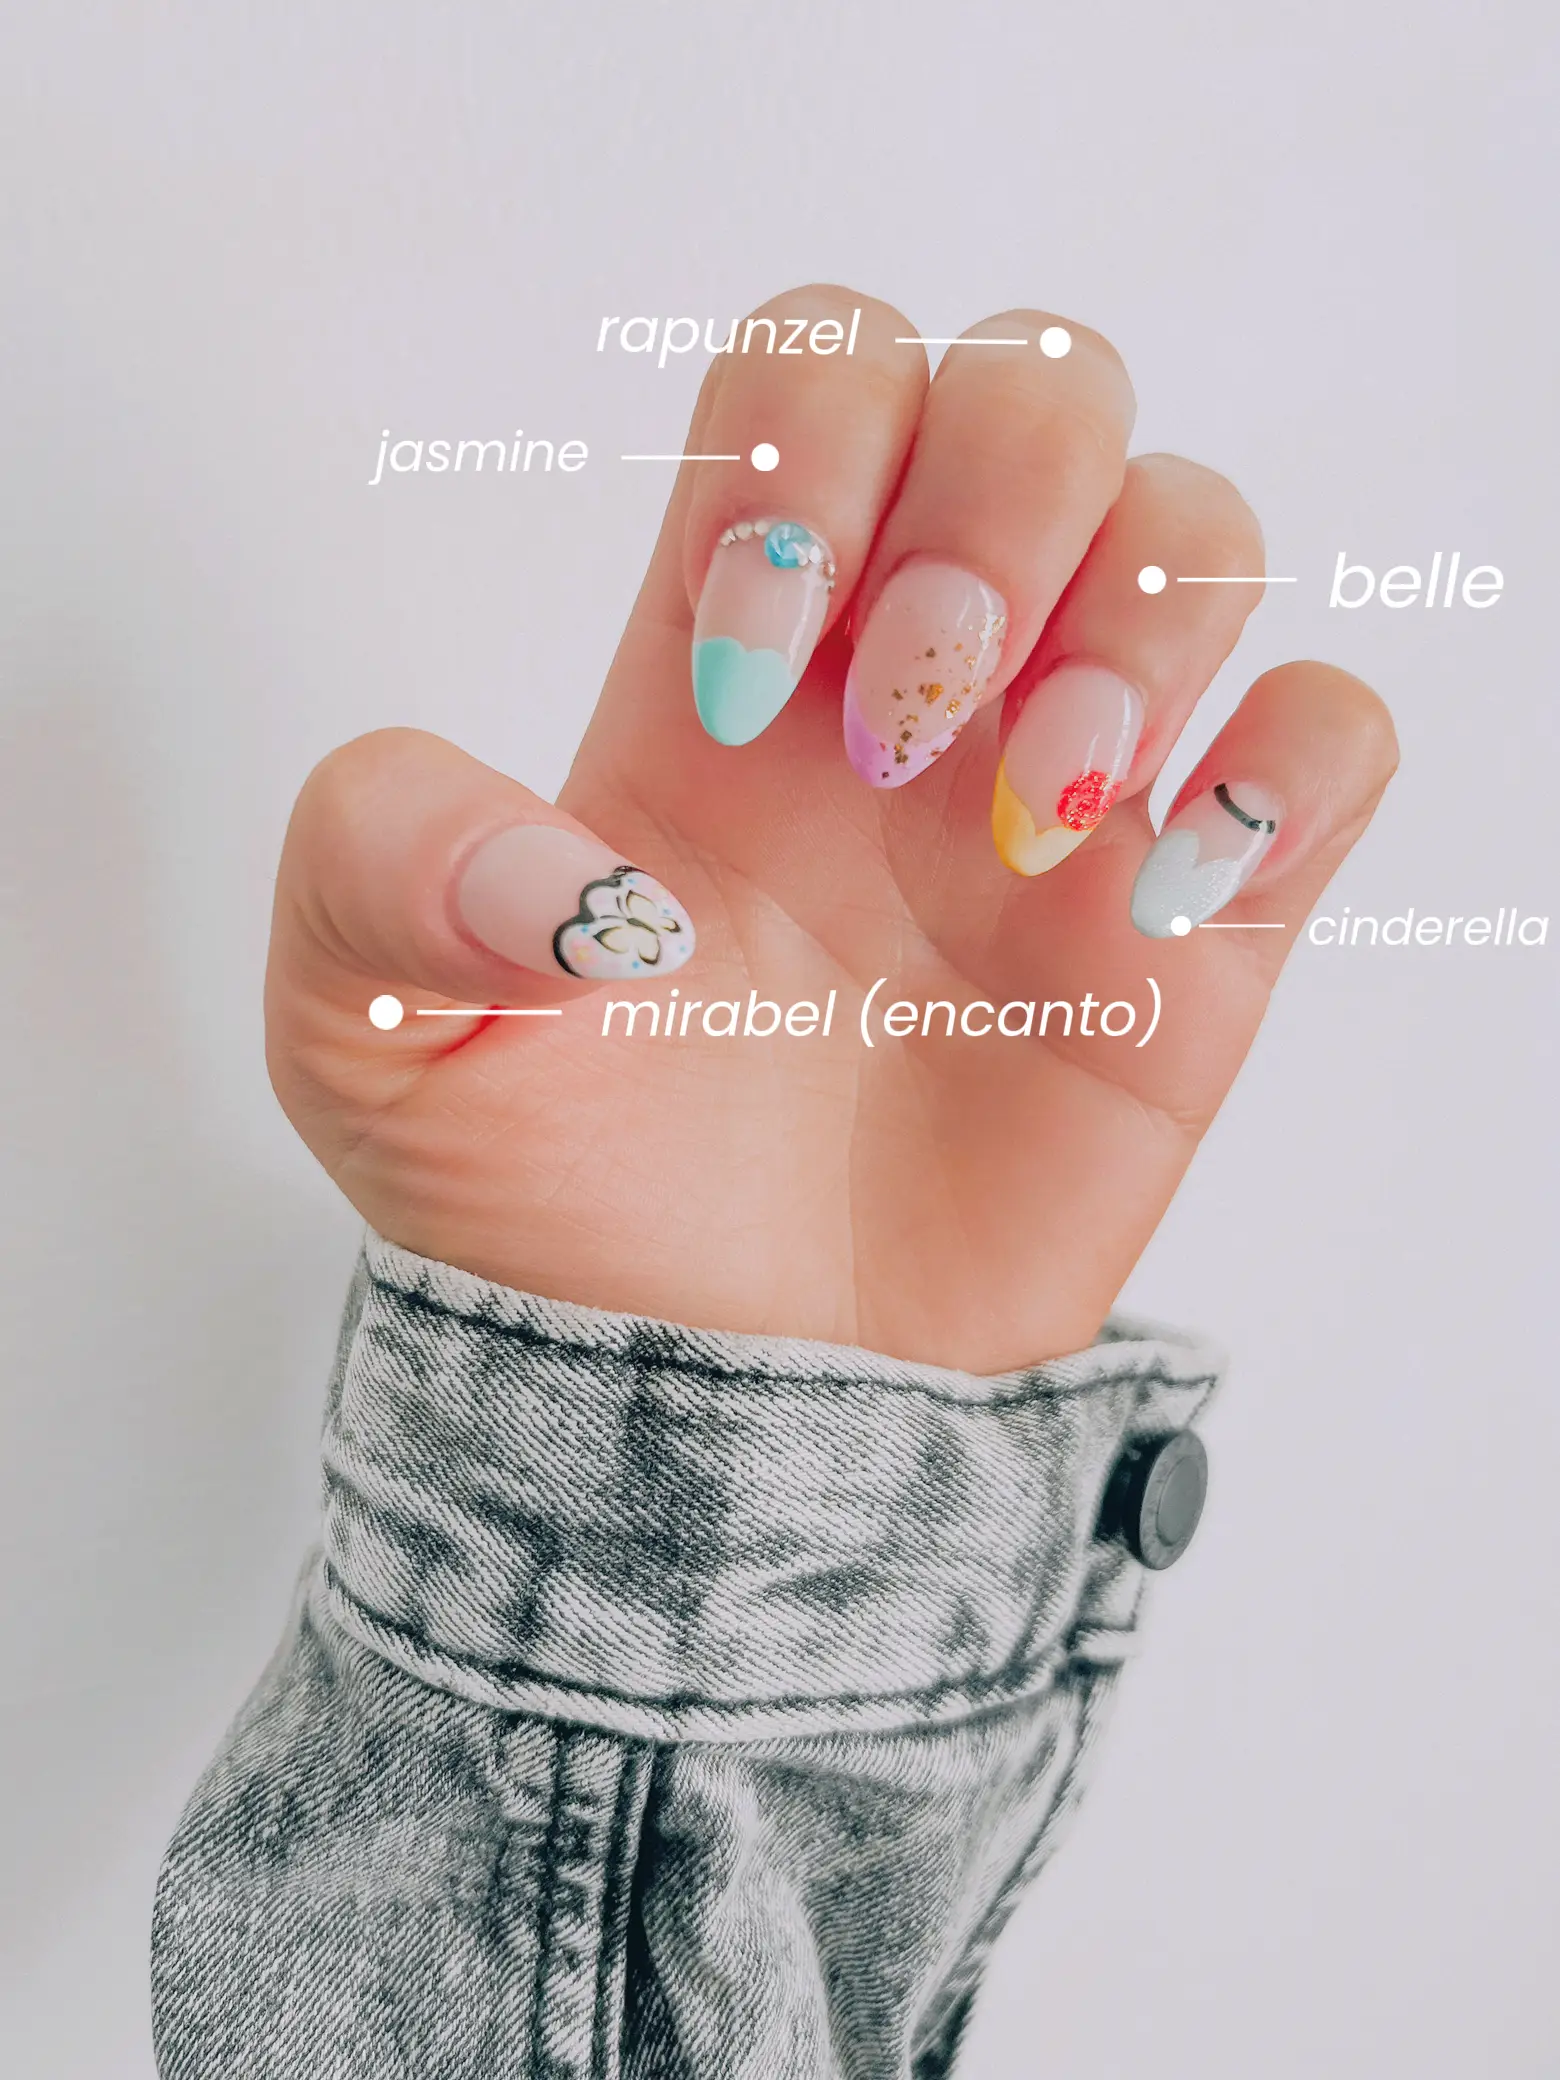 15 Adorable Disney Nail Art Ideas for Kids  Nail art disney, Disney nail  designs, Disney themed nails